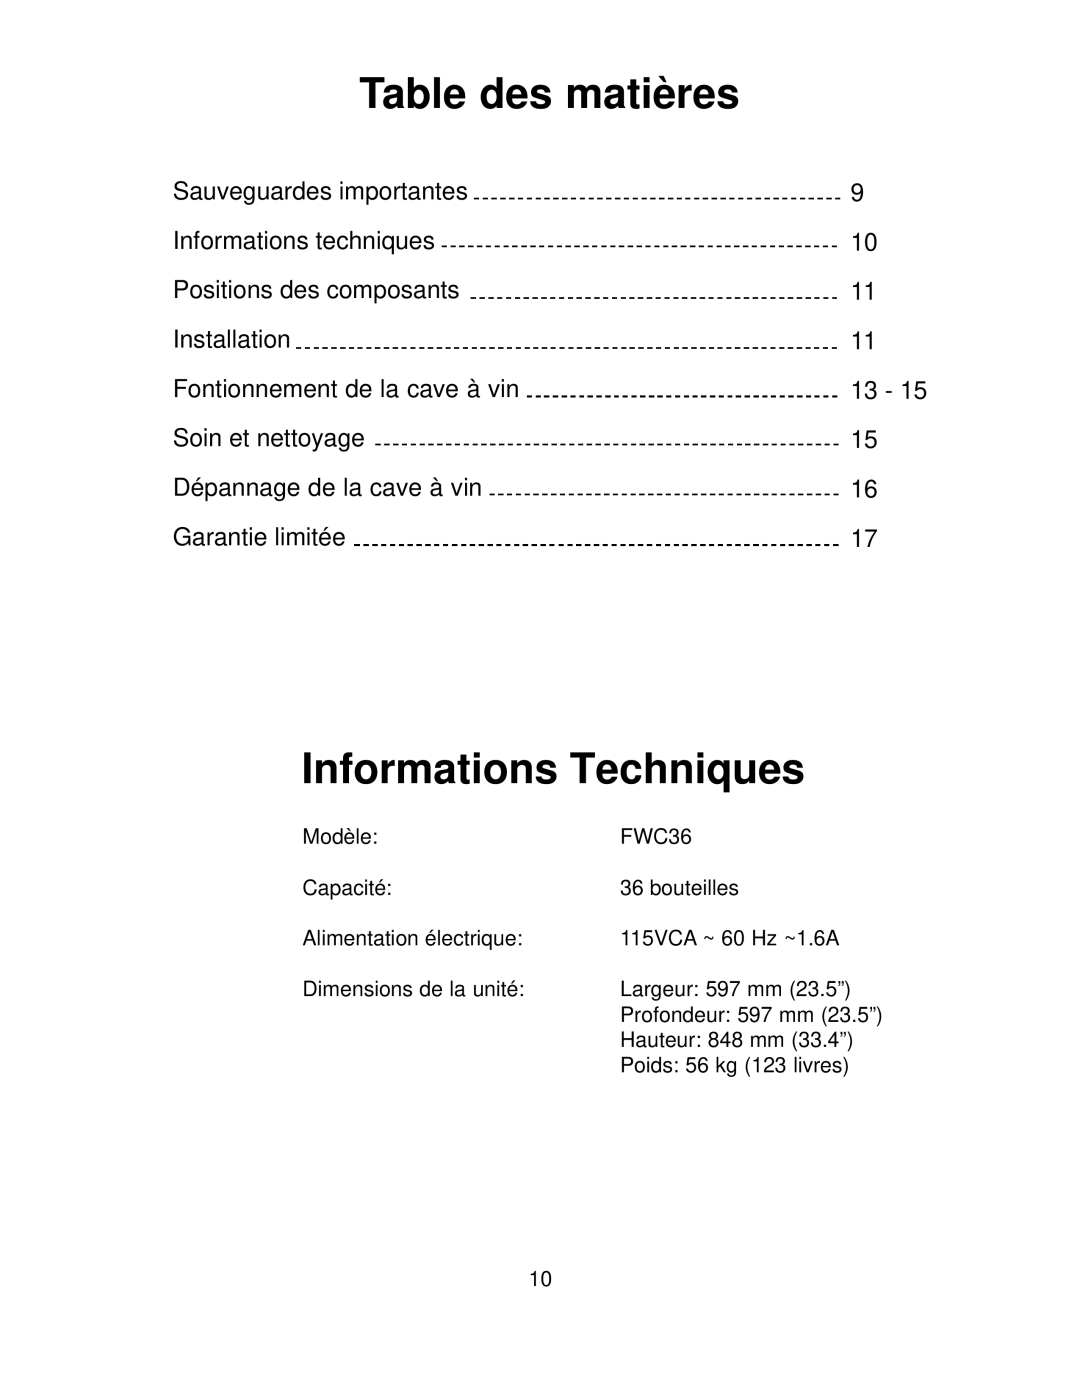 Franklin Industries, L.L.C FWC36 manual Table des matières, Informations Techniques 